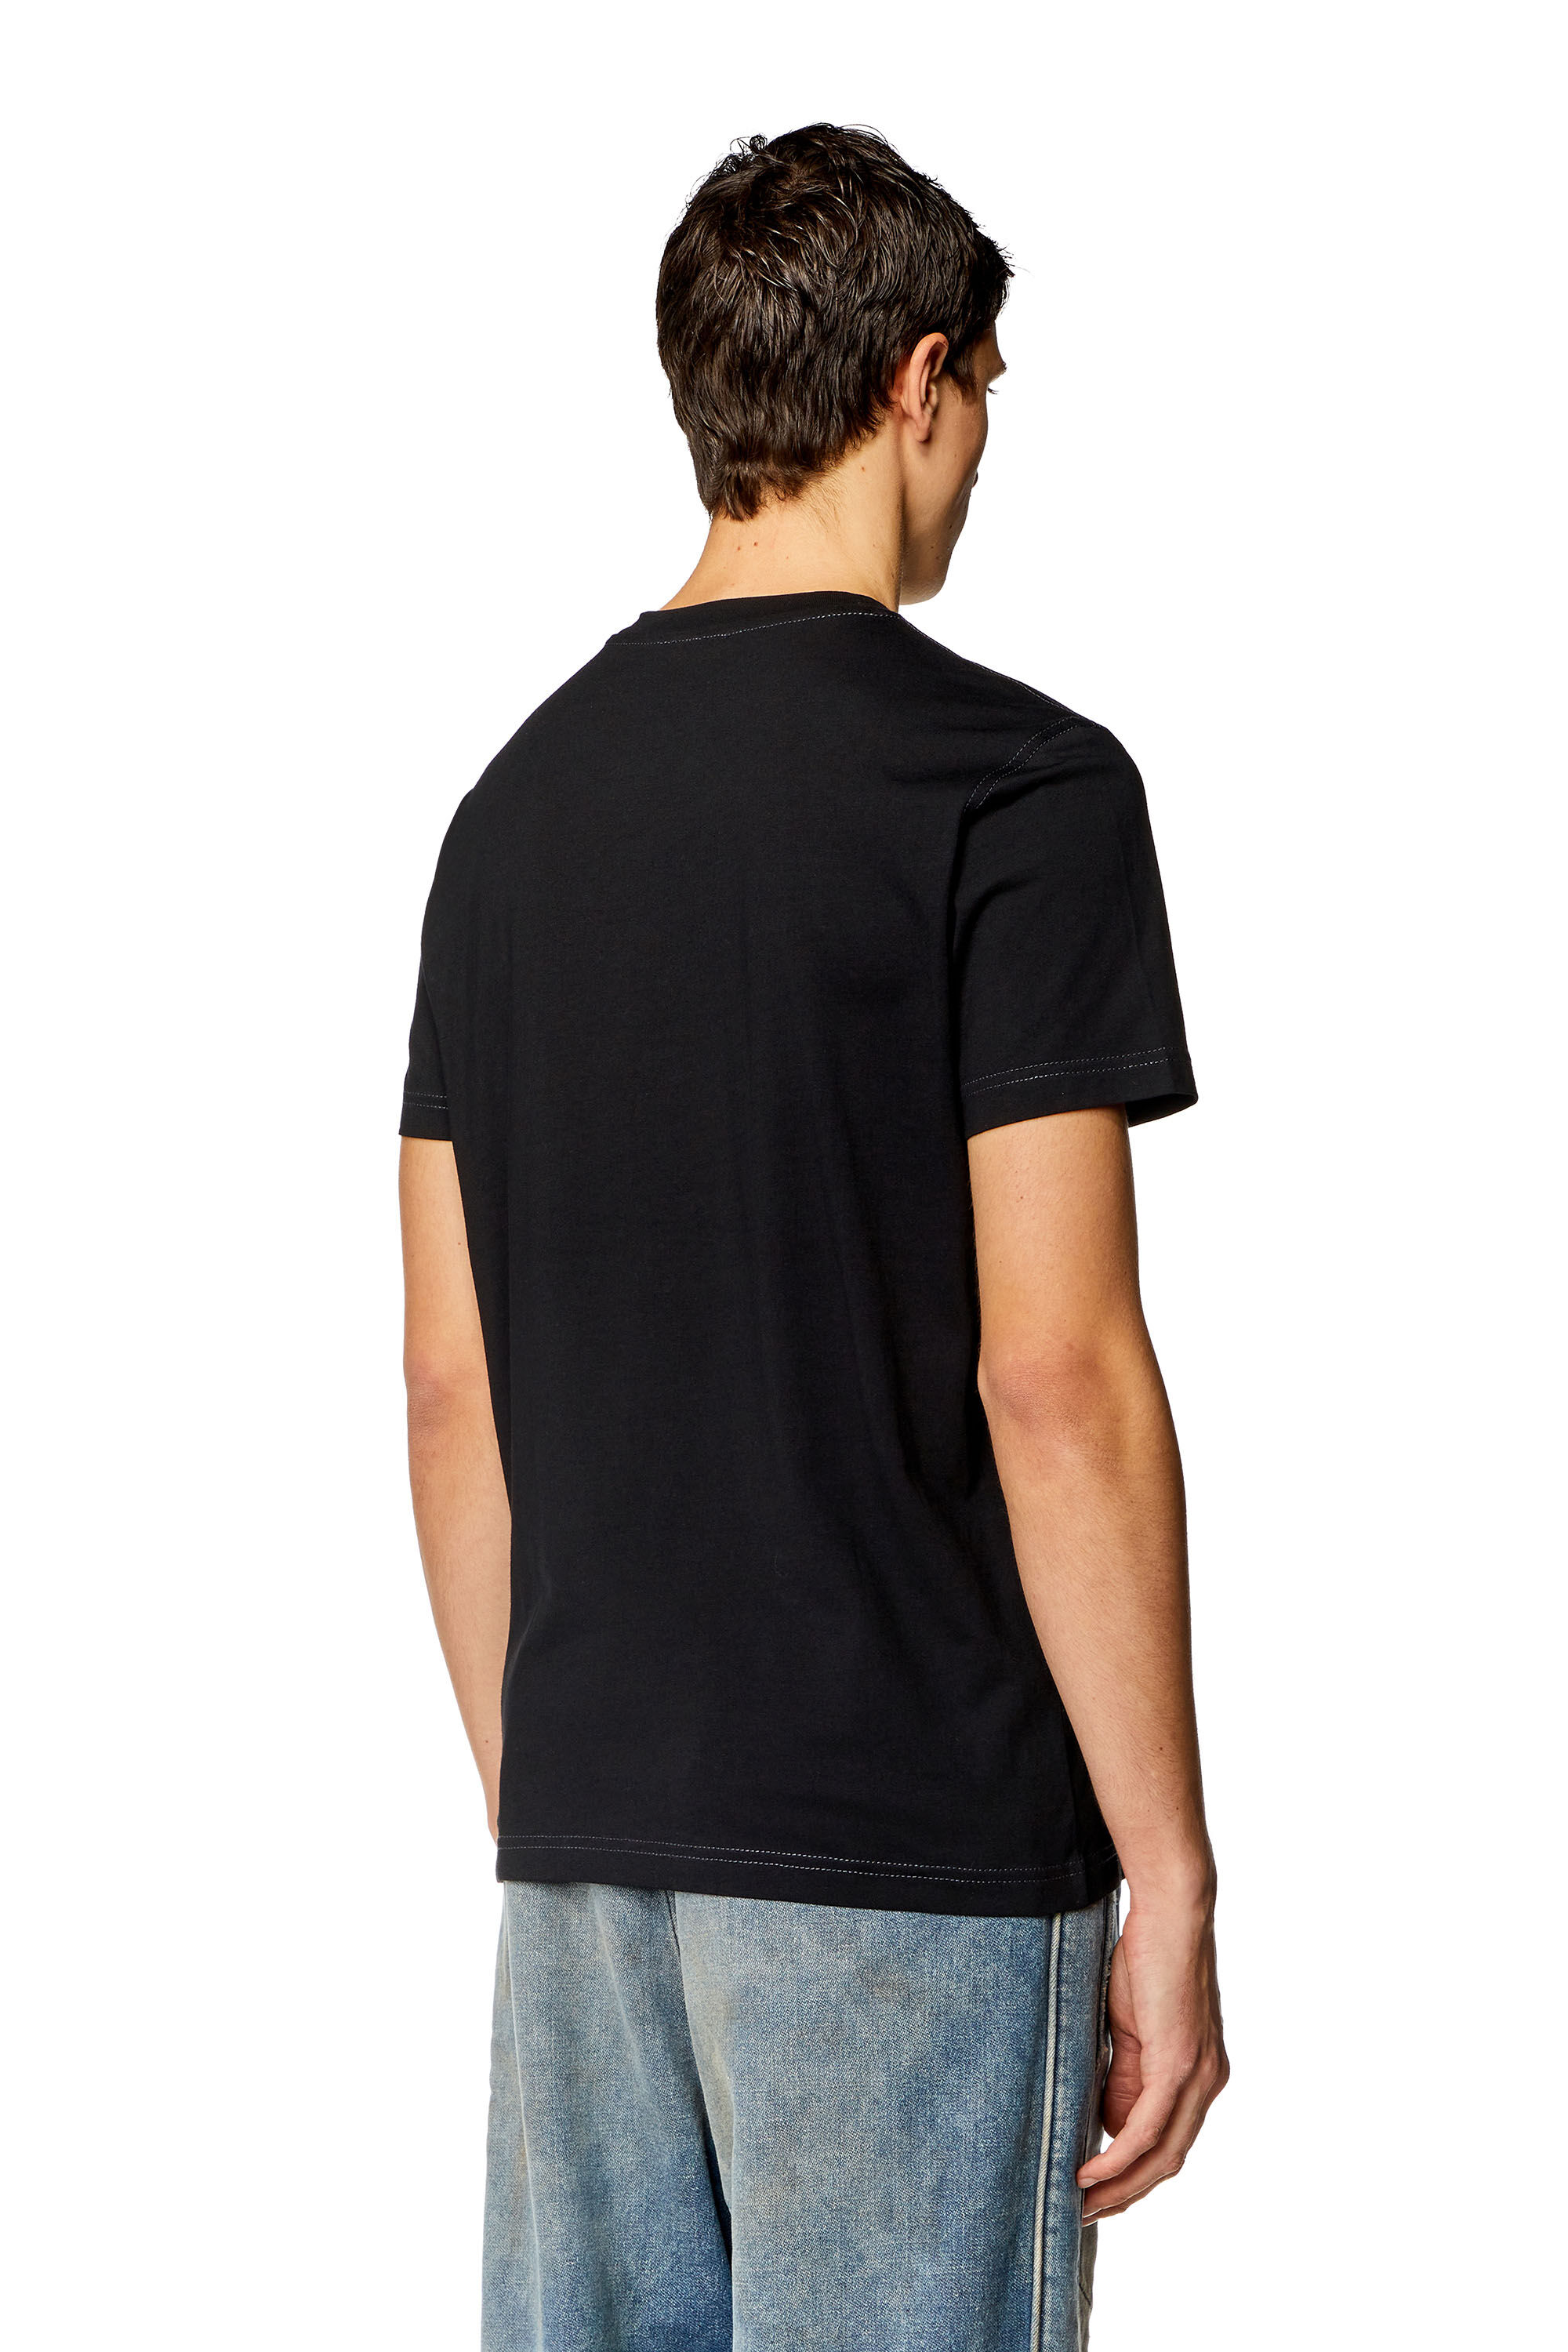 Men's T-shirt with glitchy logo | Black | Diesel